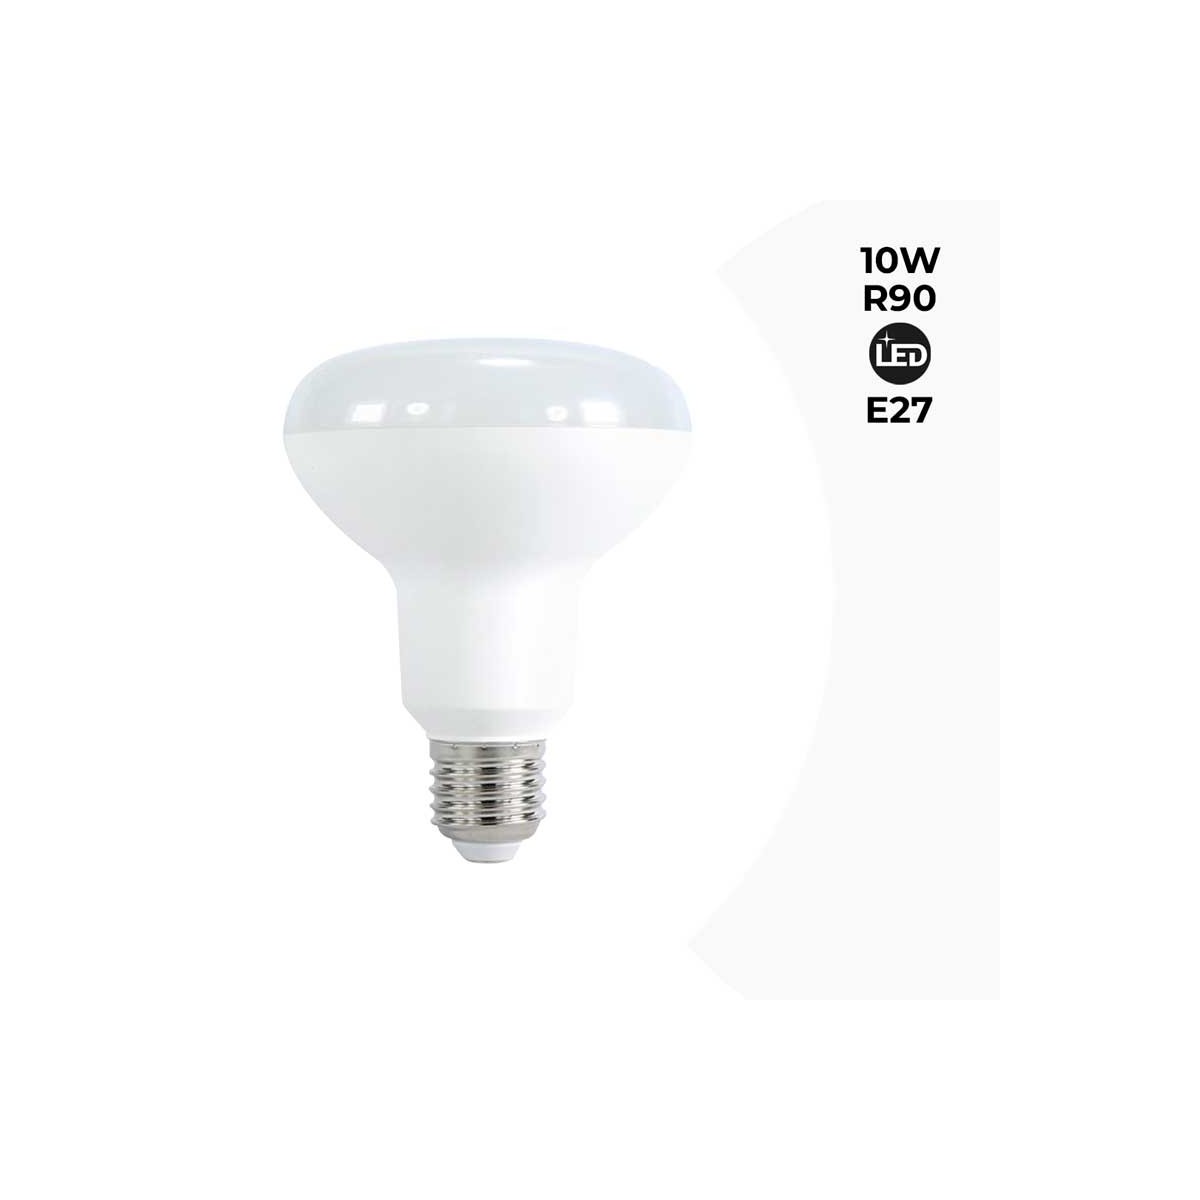 Lâmpada reflectora LED R90 10W - E27